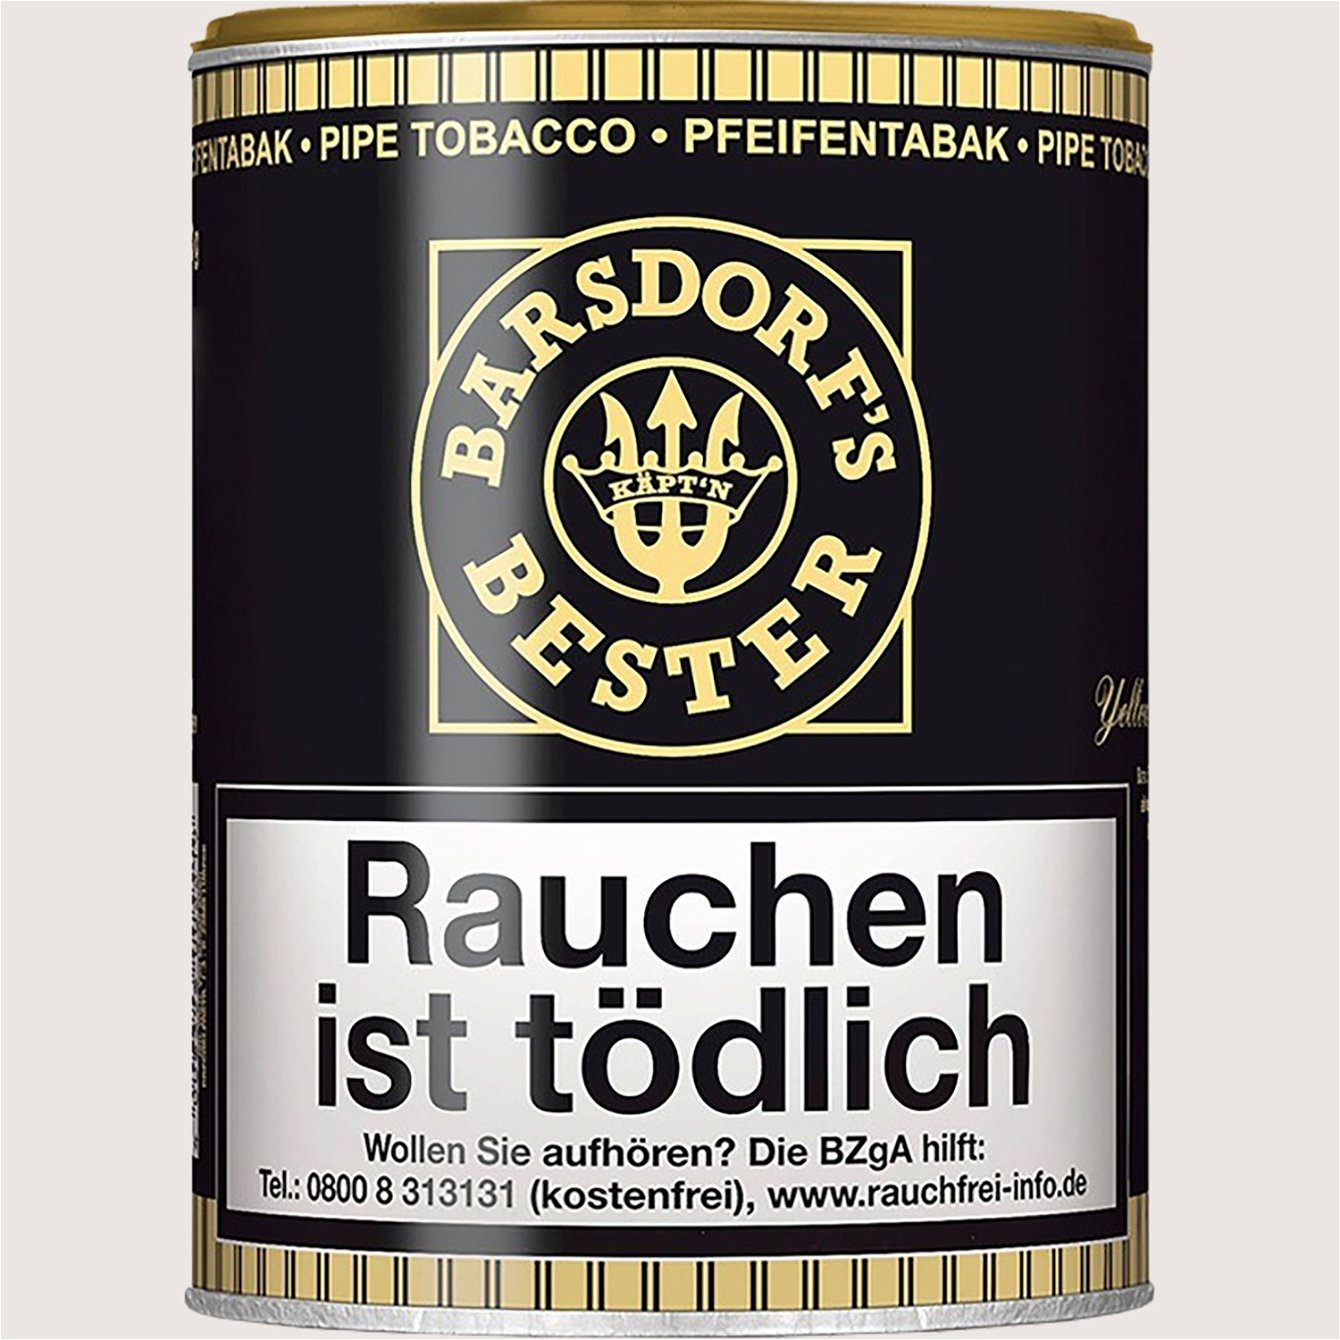 Käpt'n Barsdorf's Bester Yellow (Vanilla) 160 g